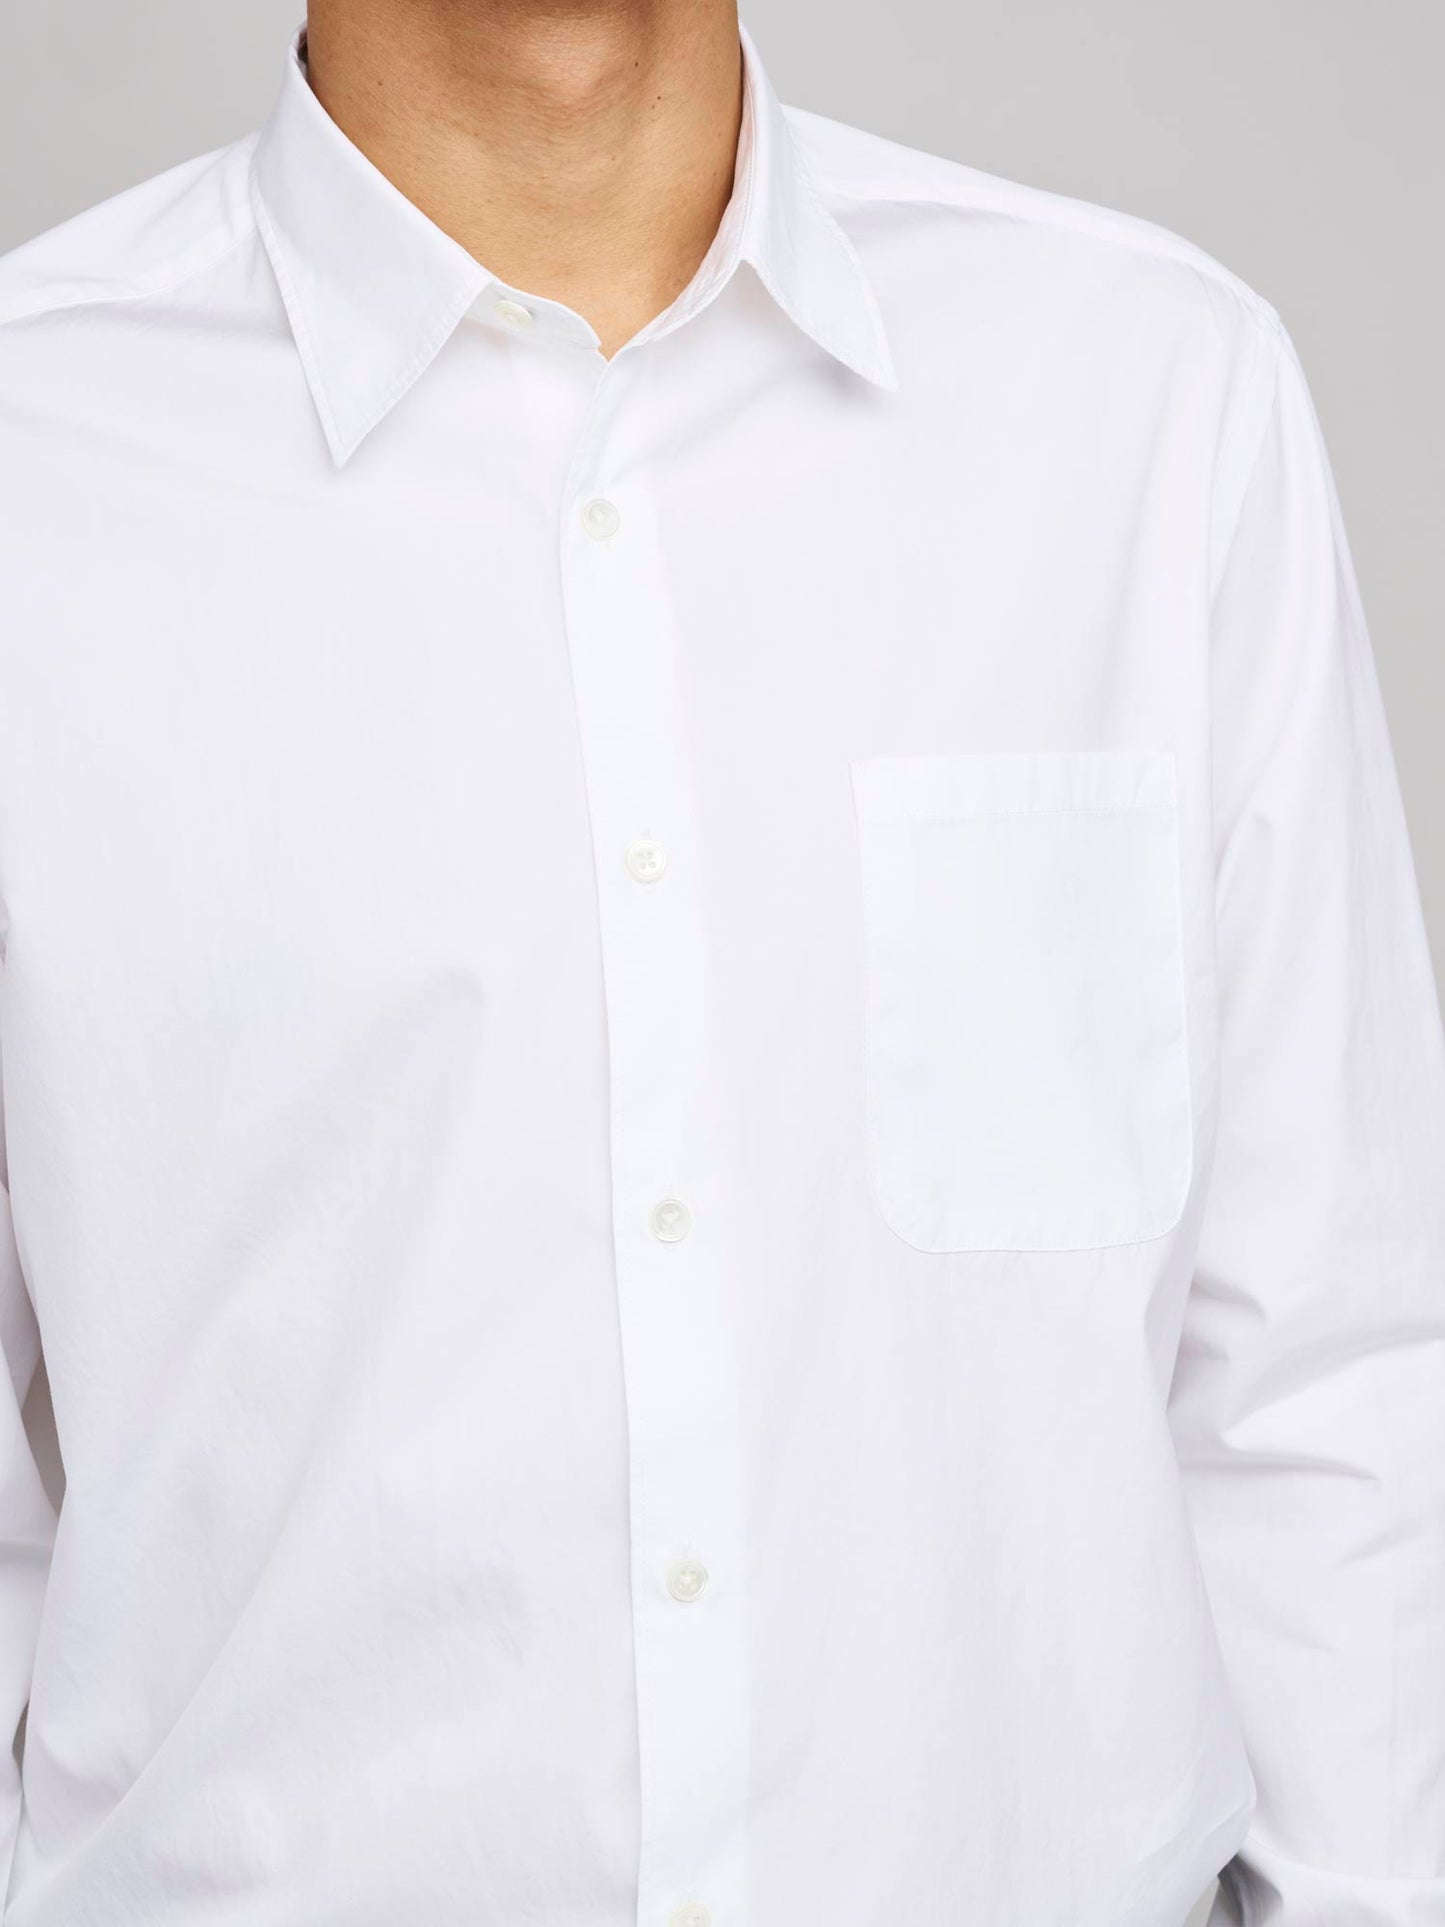 New Standard Shirt, White